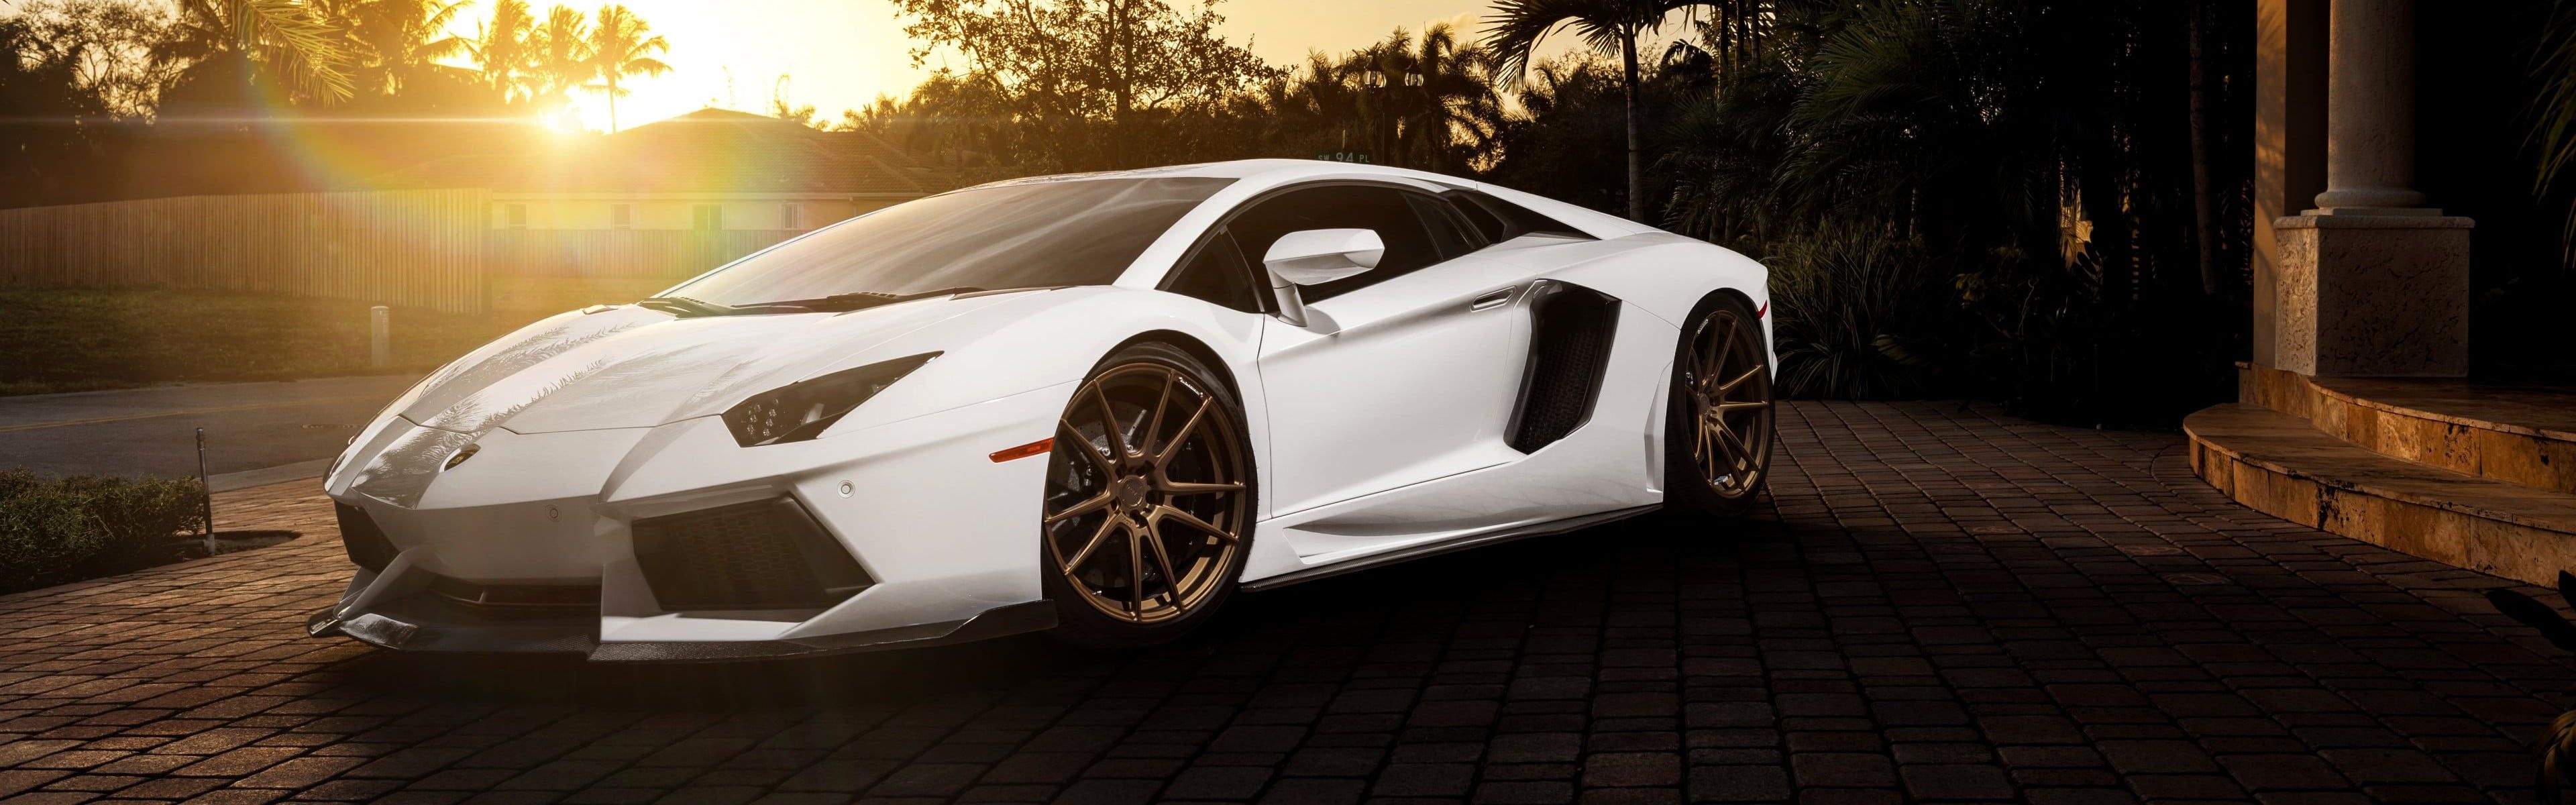 White sport car, Lamborghini Aventador, Dual monitors, 4k wallpaper, 3840x1200 Dual Screen Desktop